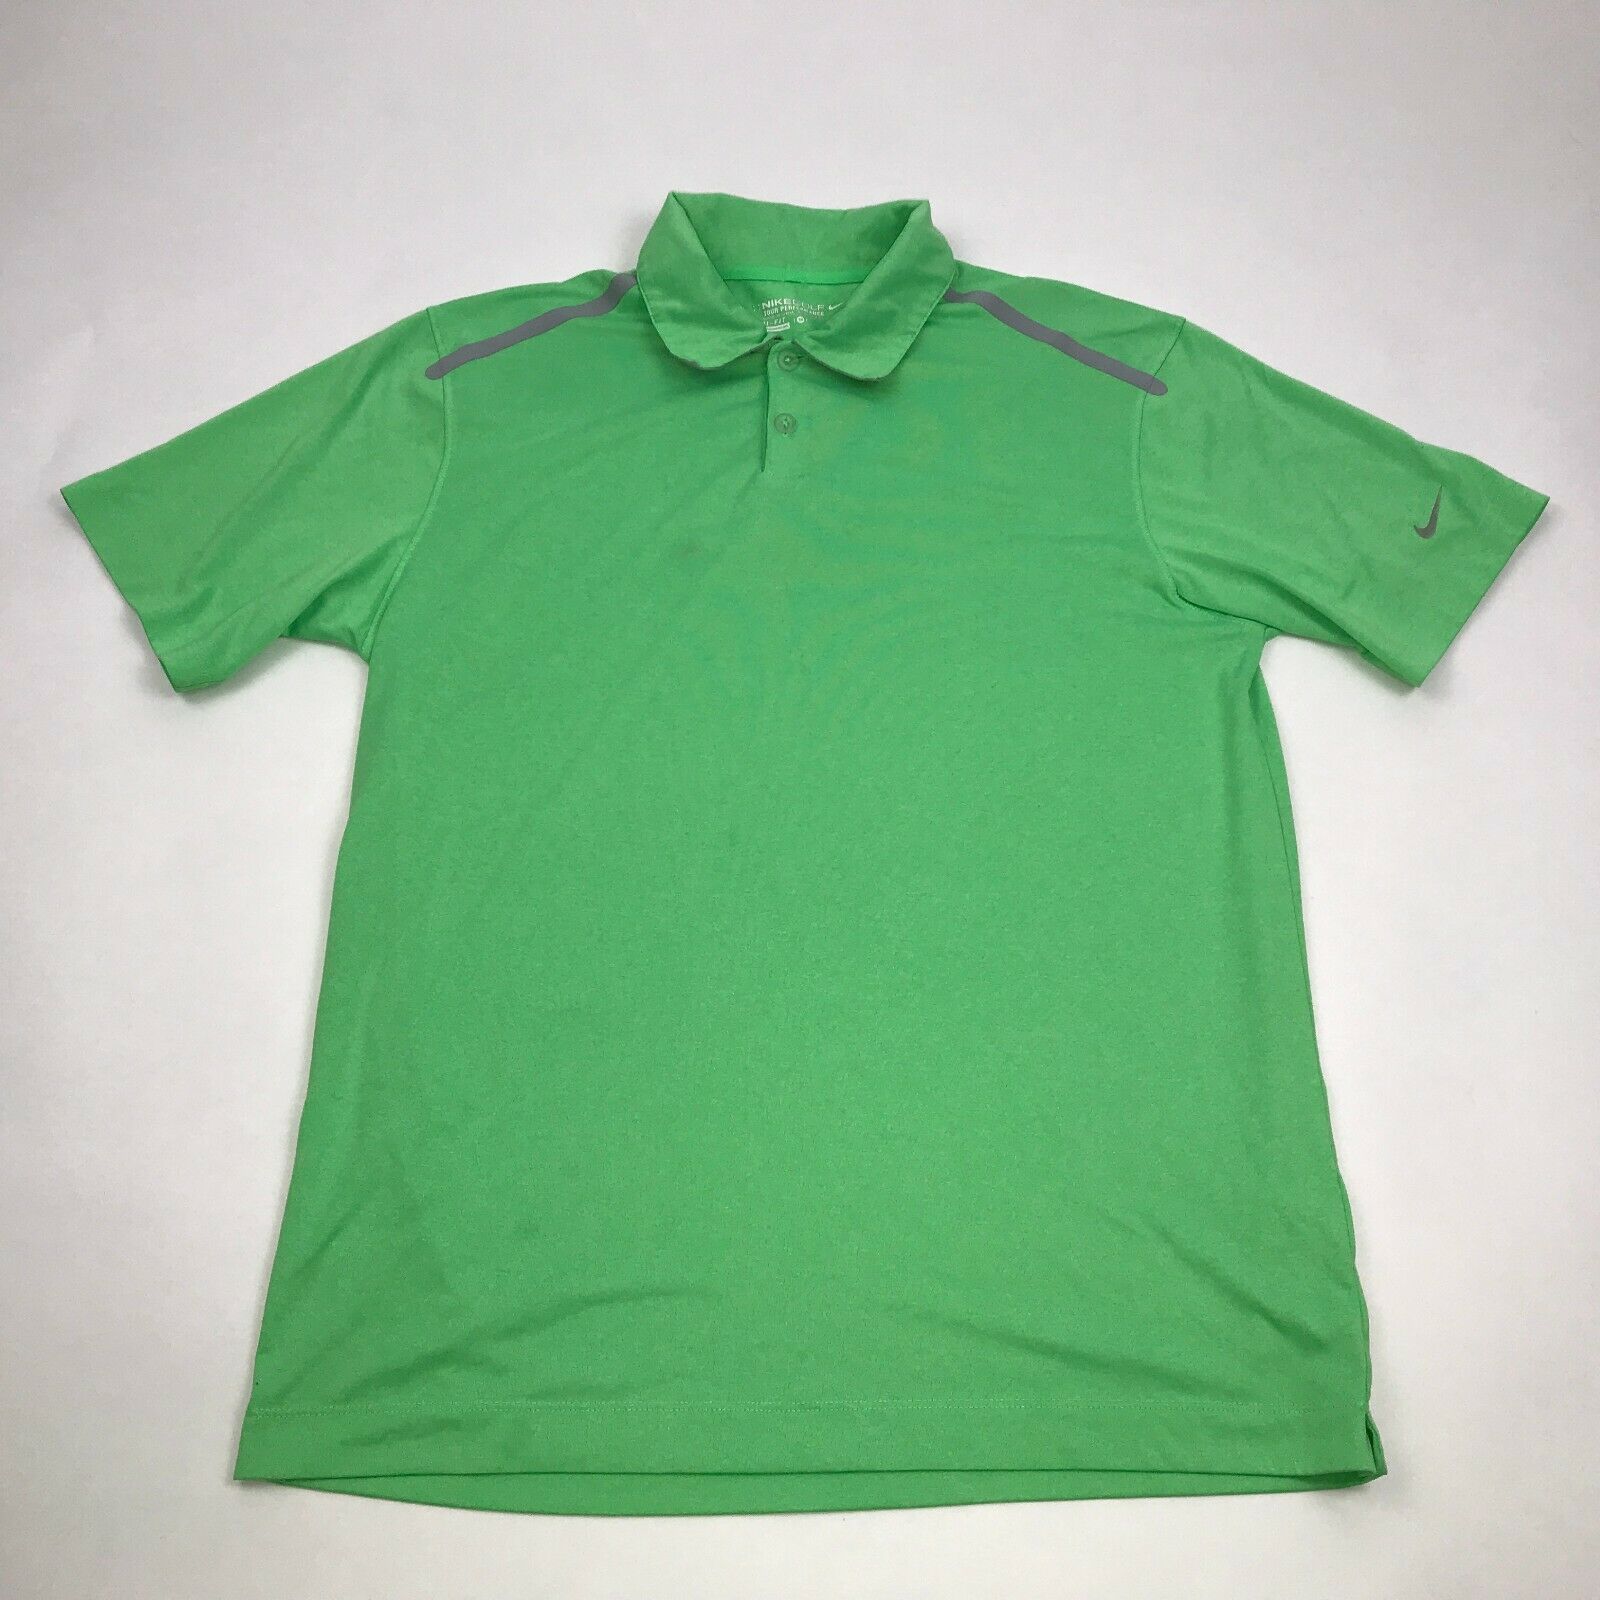 NIKE GOLF Tour Performance Polo Dry Fit Shirt Size M Medium Lime Green ...